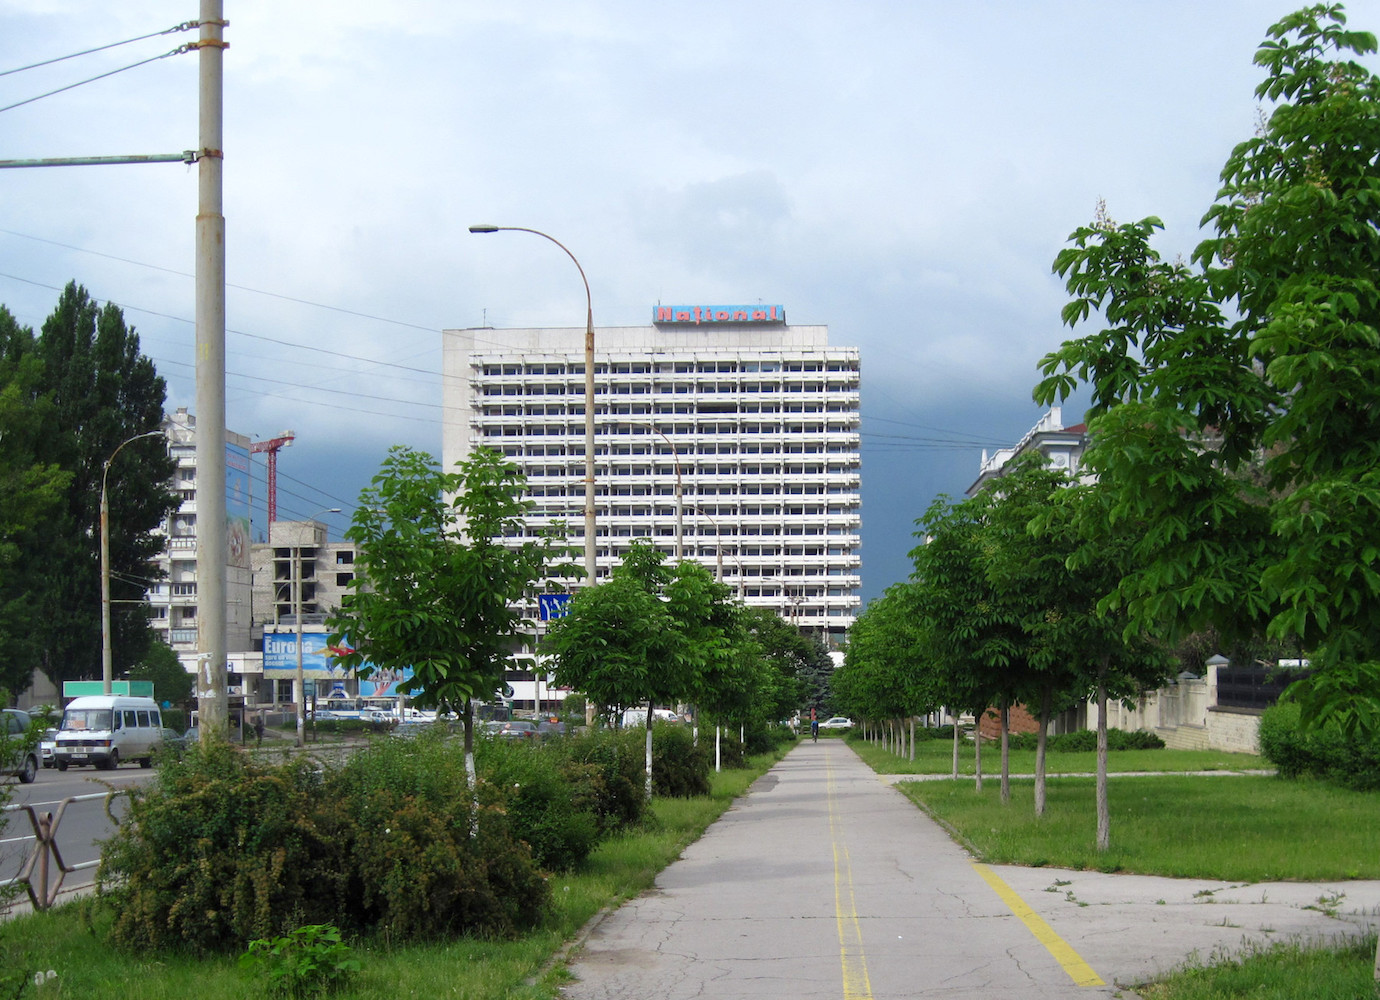 Moldova’s emblematic socialist modernist National Hotel risks demolition | Concrete Ideas